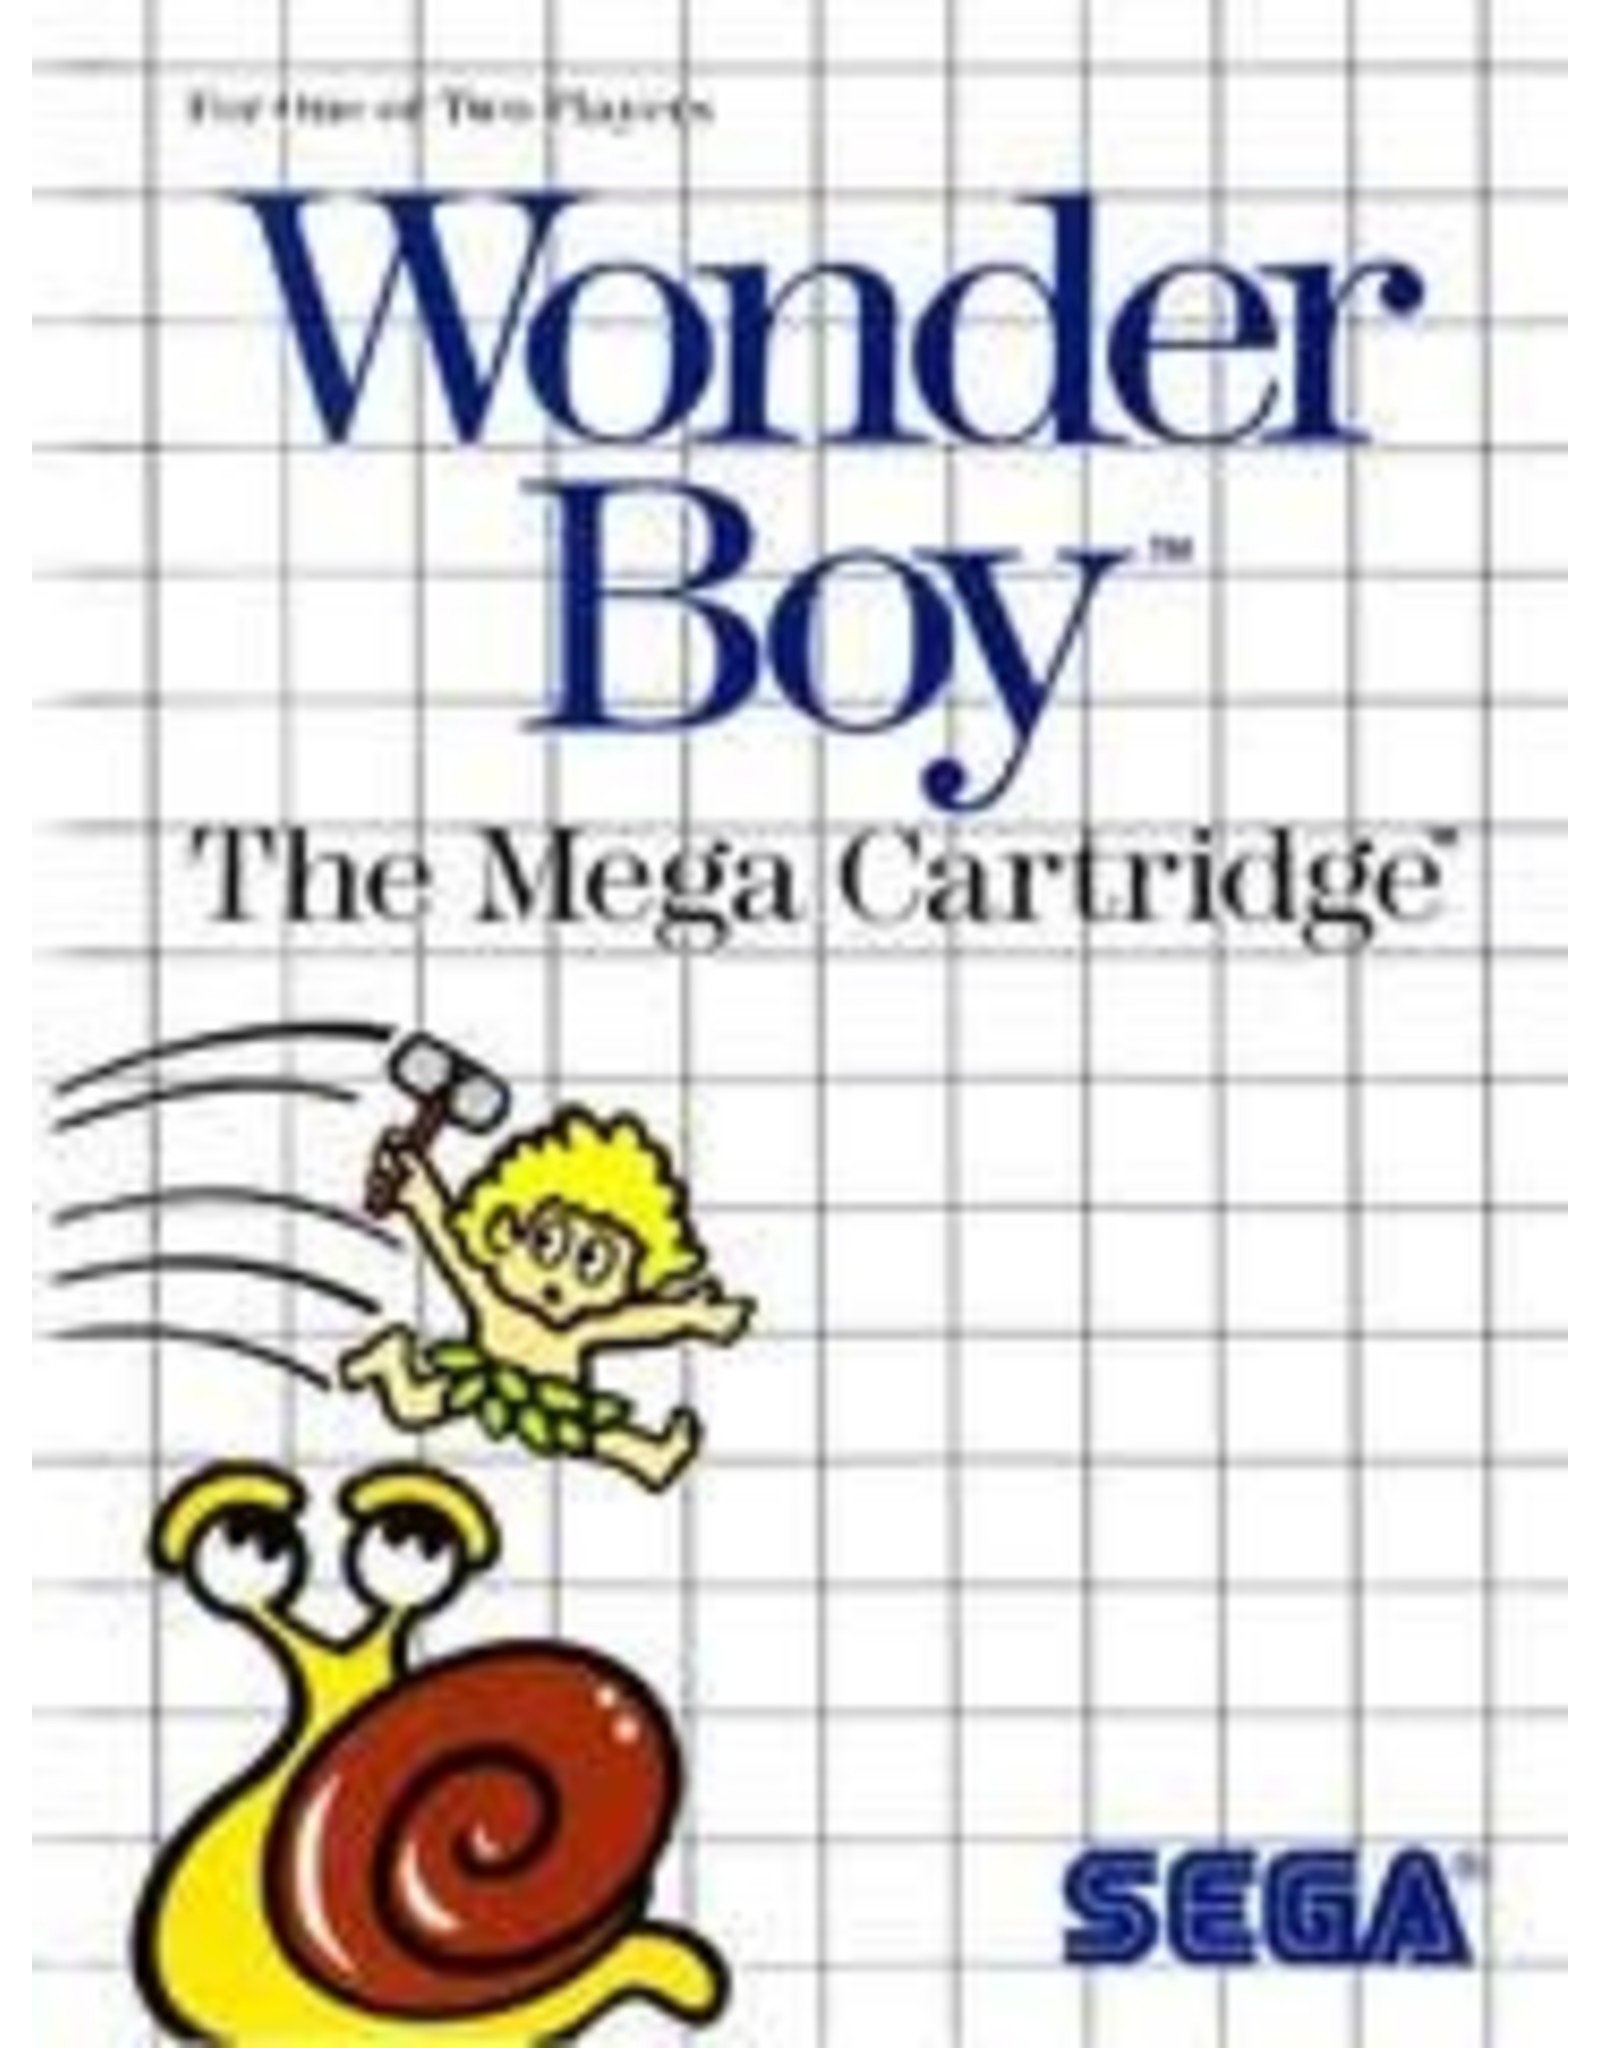 Sega Master System Wonder Boy (Cart Only)